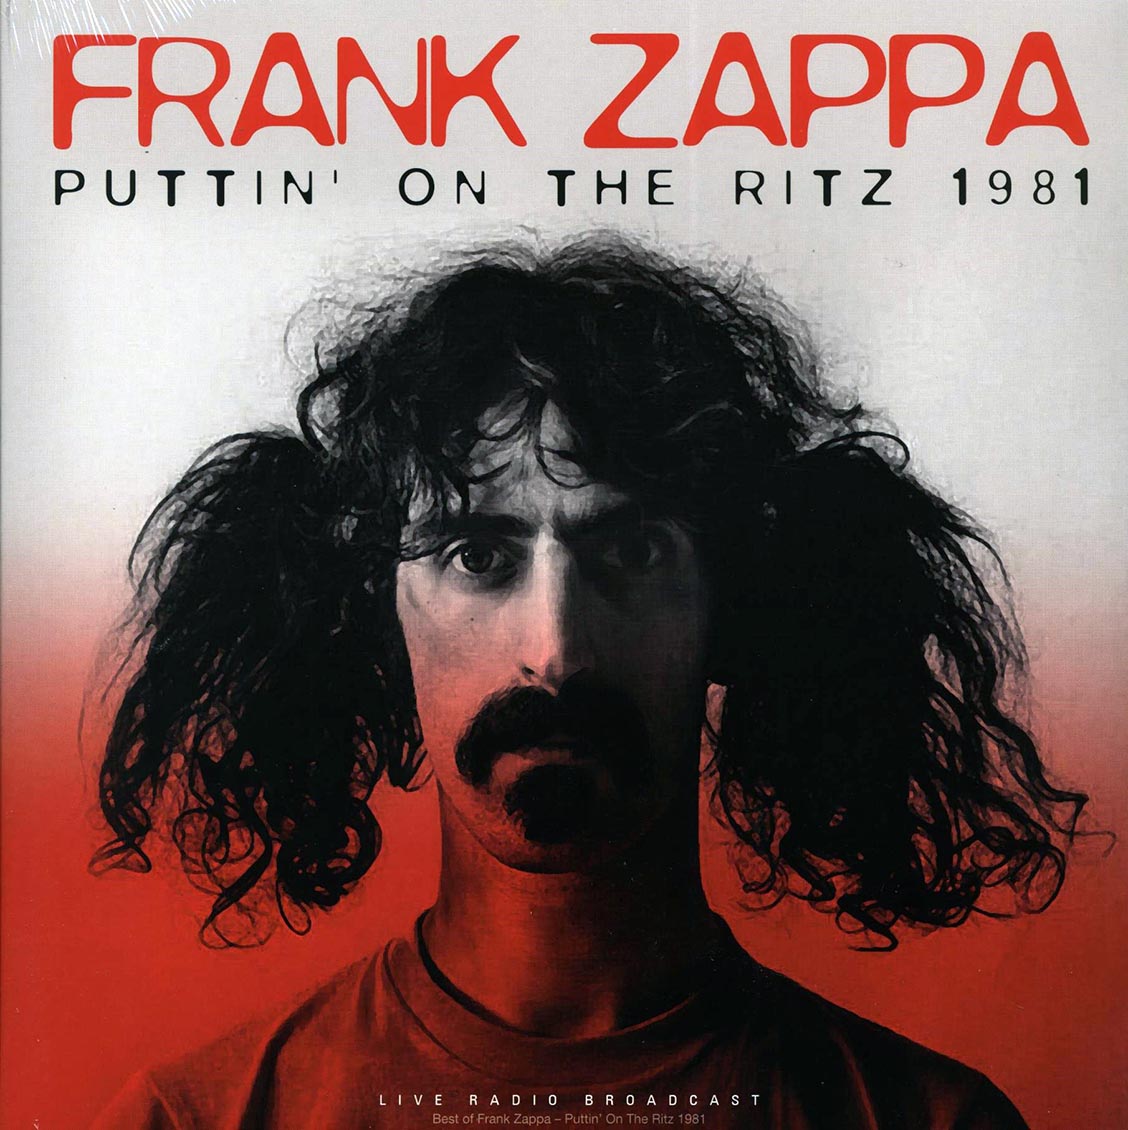 Frank Zappa - Puttin' On The Ritz 1981 - Vinyl LP